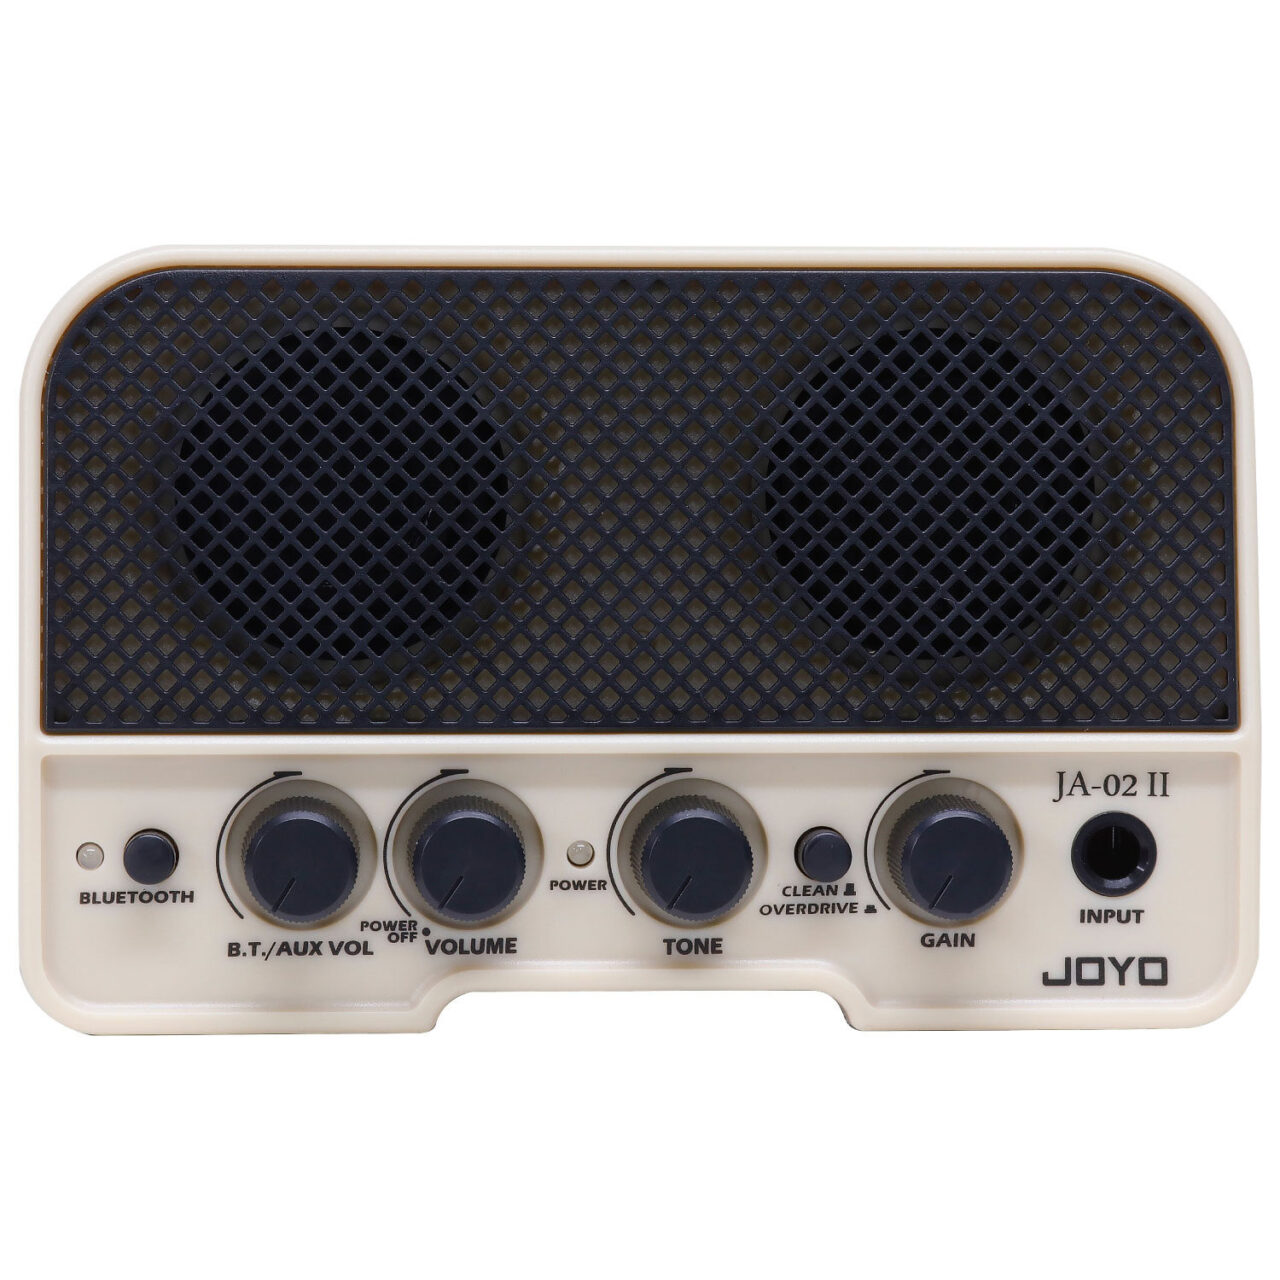 JOYO ジョーヨー JA-02 II BLK/BEI Bluetooth搭載5W充電式アンプ